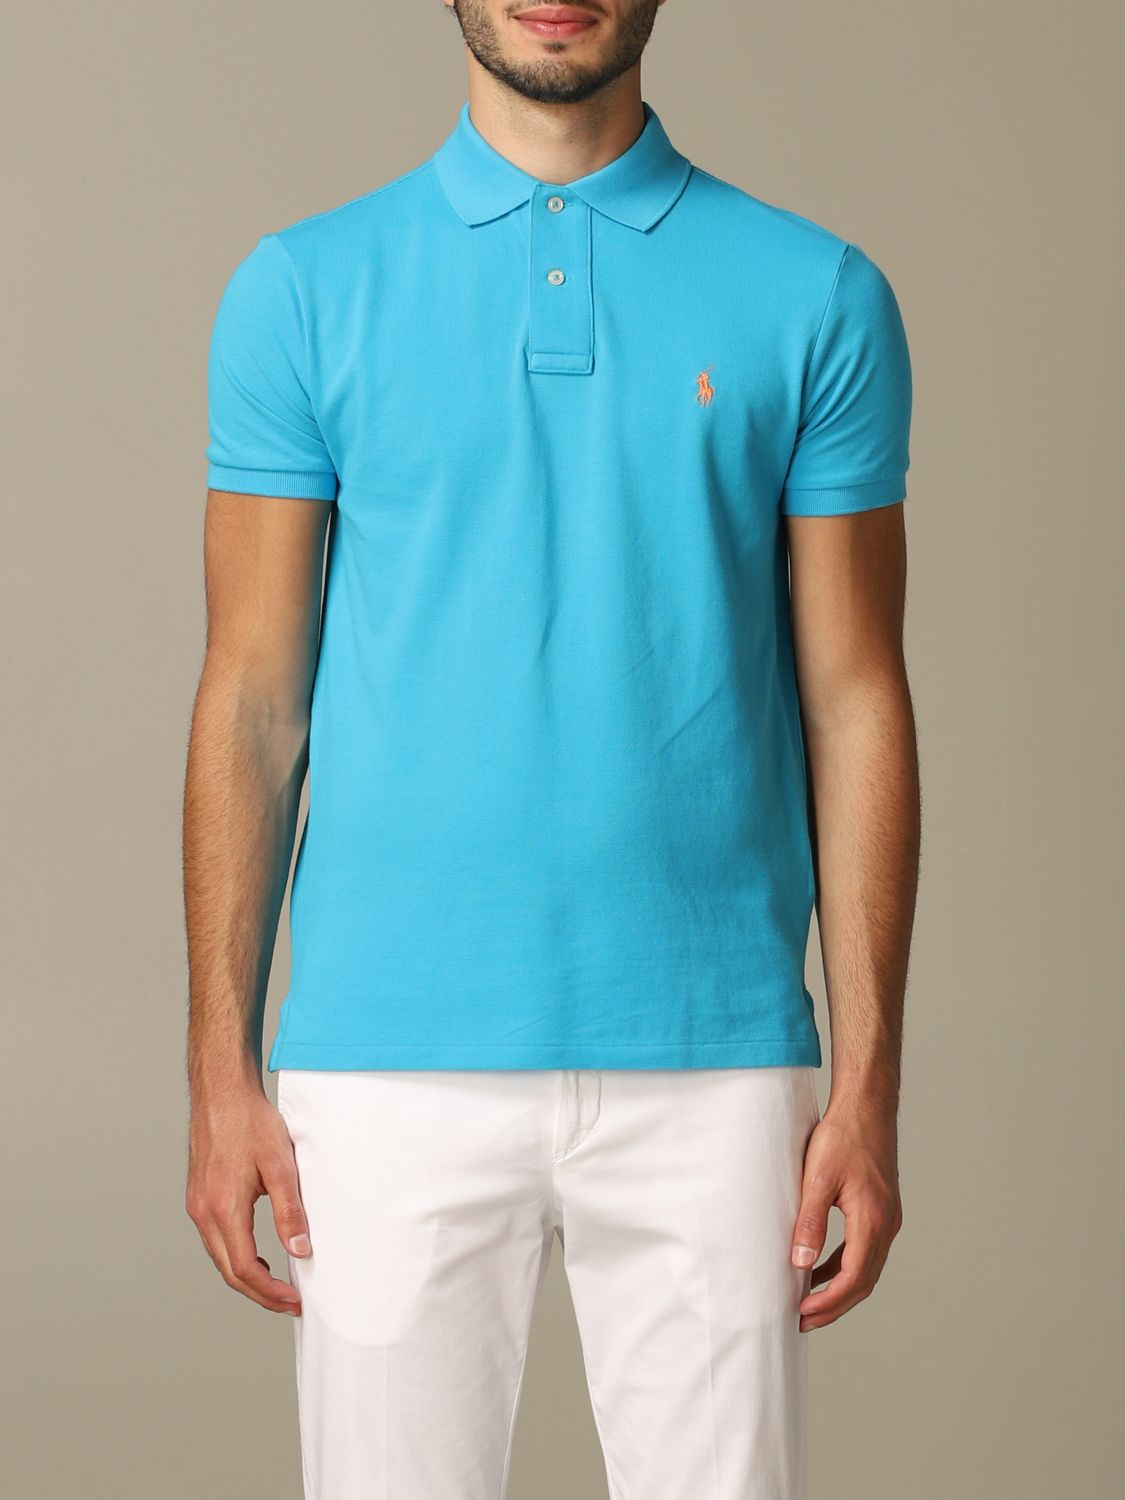 POLO RALPH LAUREN: polo shirt in honeycomb cotton - Turquoise | Polo Ralph  Lauren polo shirt 710795080 online on 